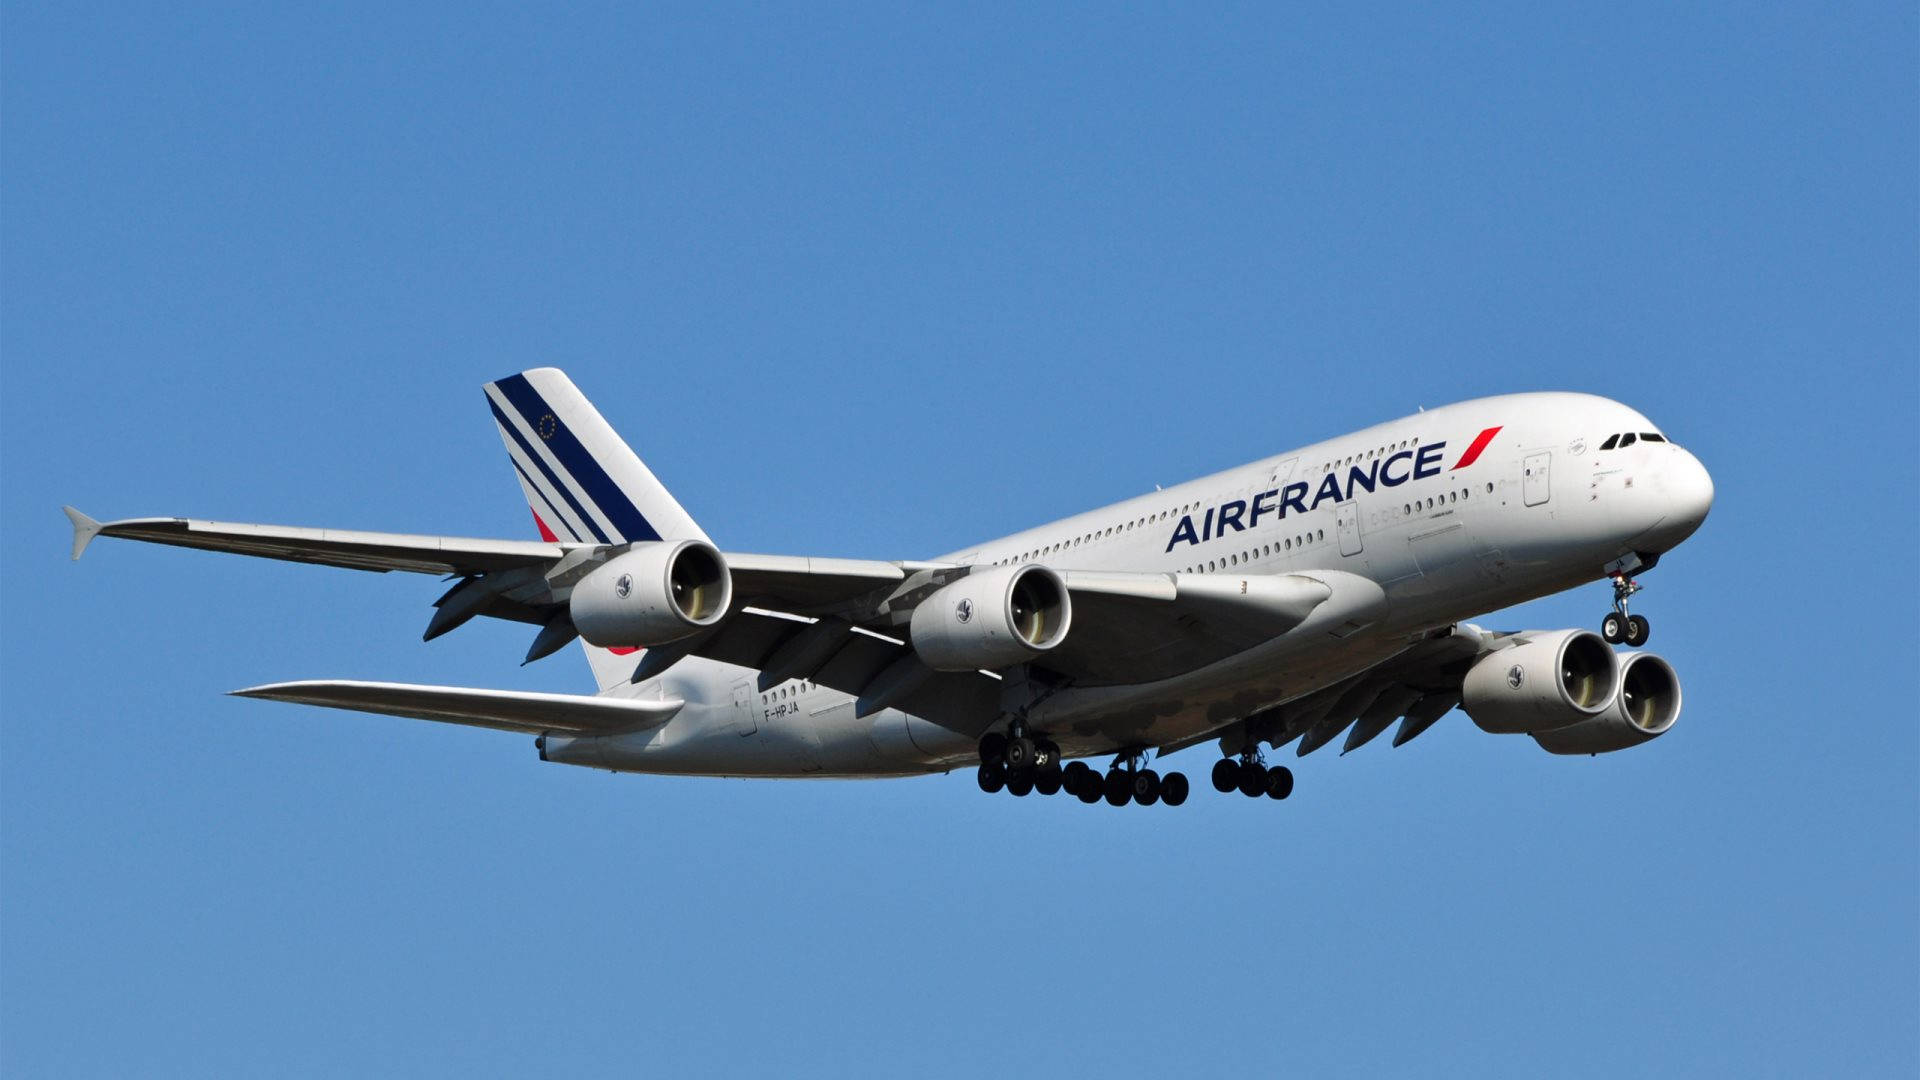 Air France Airbus Superjumbo Plane In Clear Skies Wallpaper